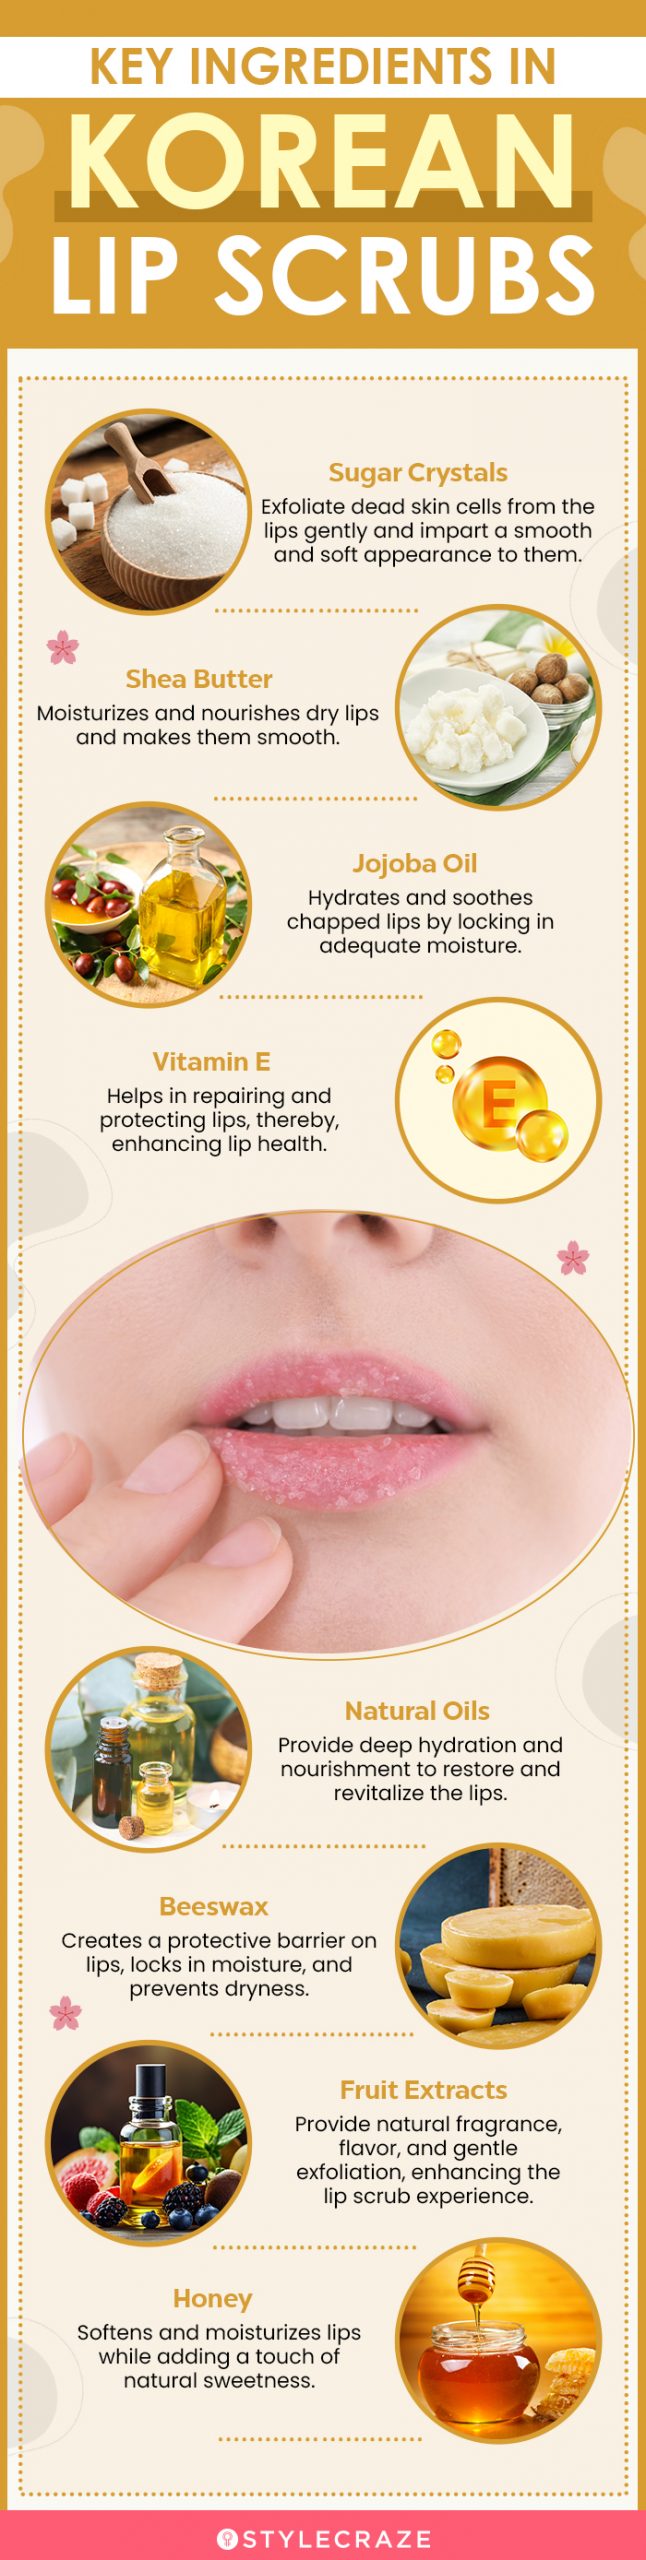  Key Ingredients In Korean Lip Scrubs (infographic)